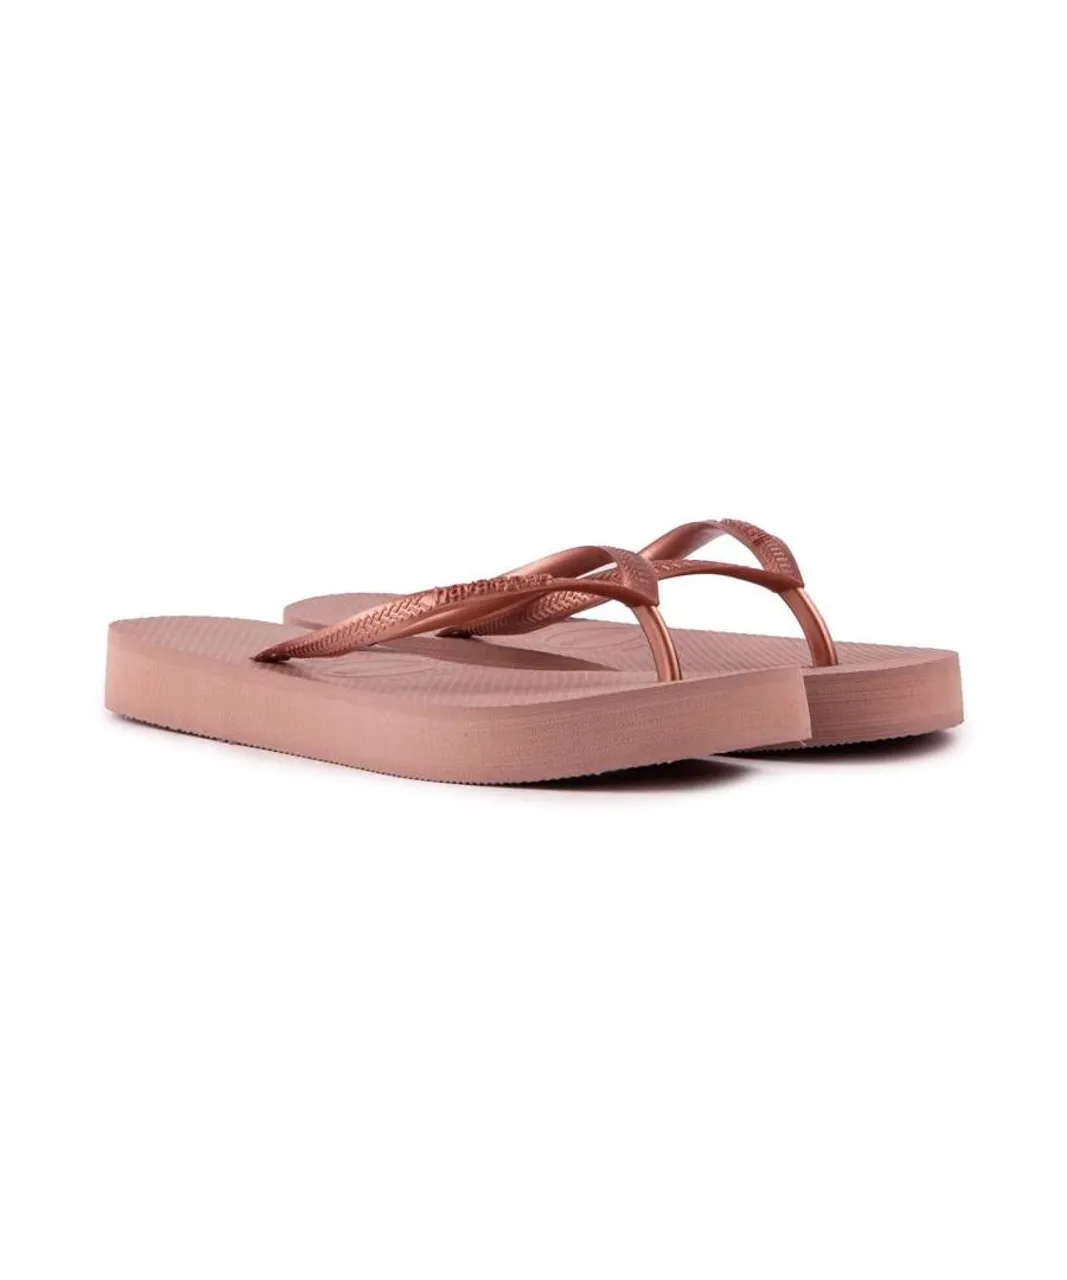 Havaianas Womens Slim Flatform Sandals - Pink Rubber